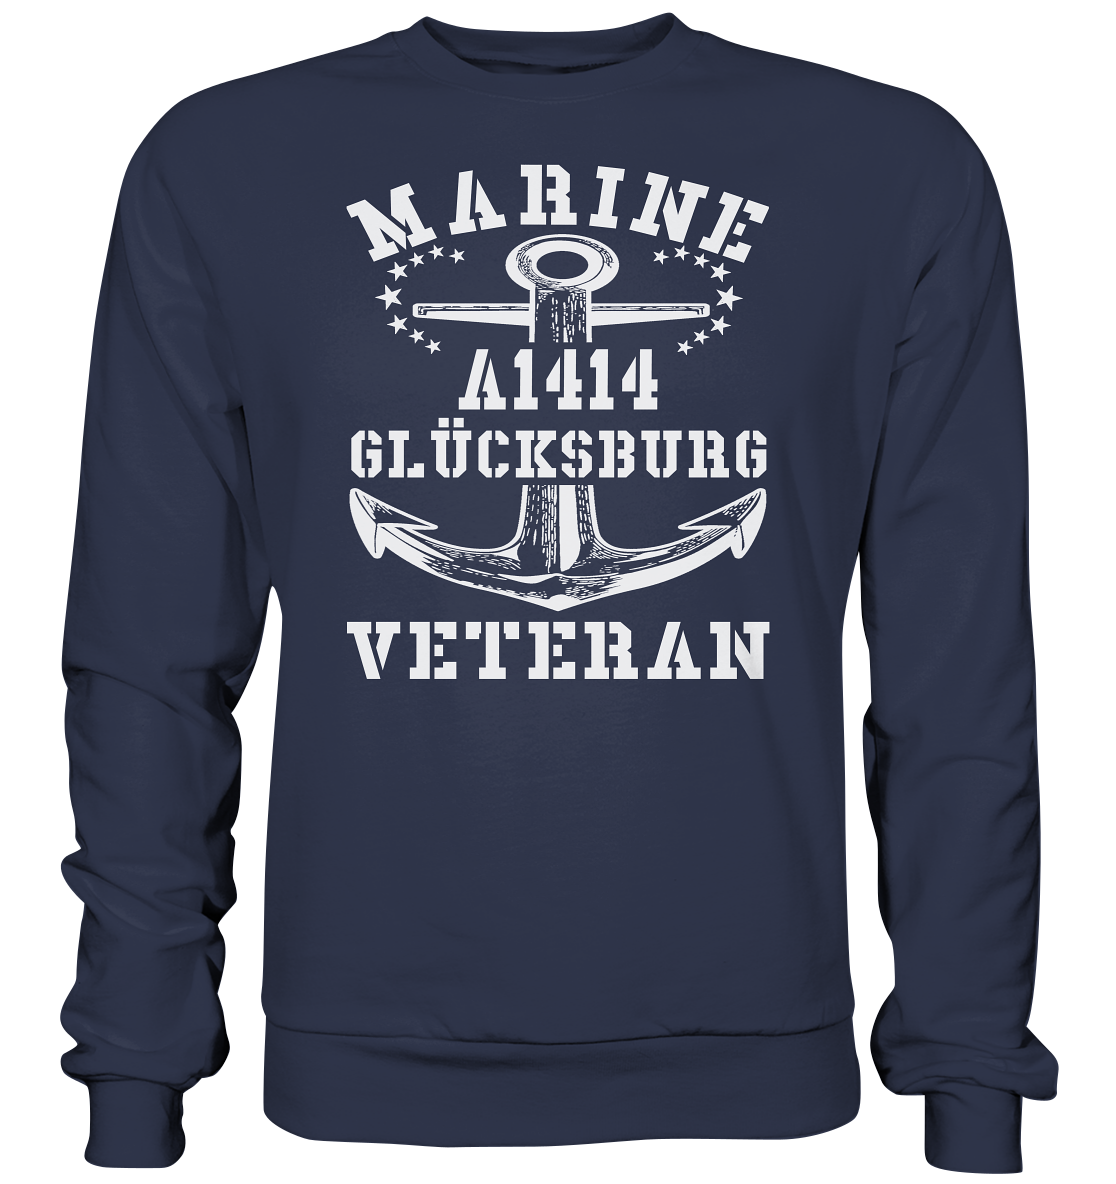 Troßschiff A1414 GLÜCKSBURG Marine Veteran - Premium Sweatshirt